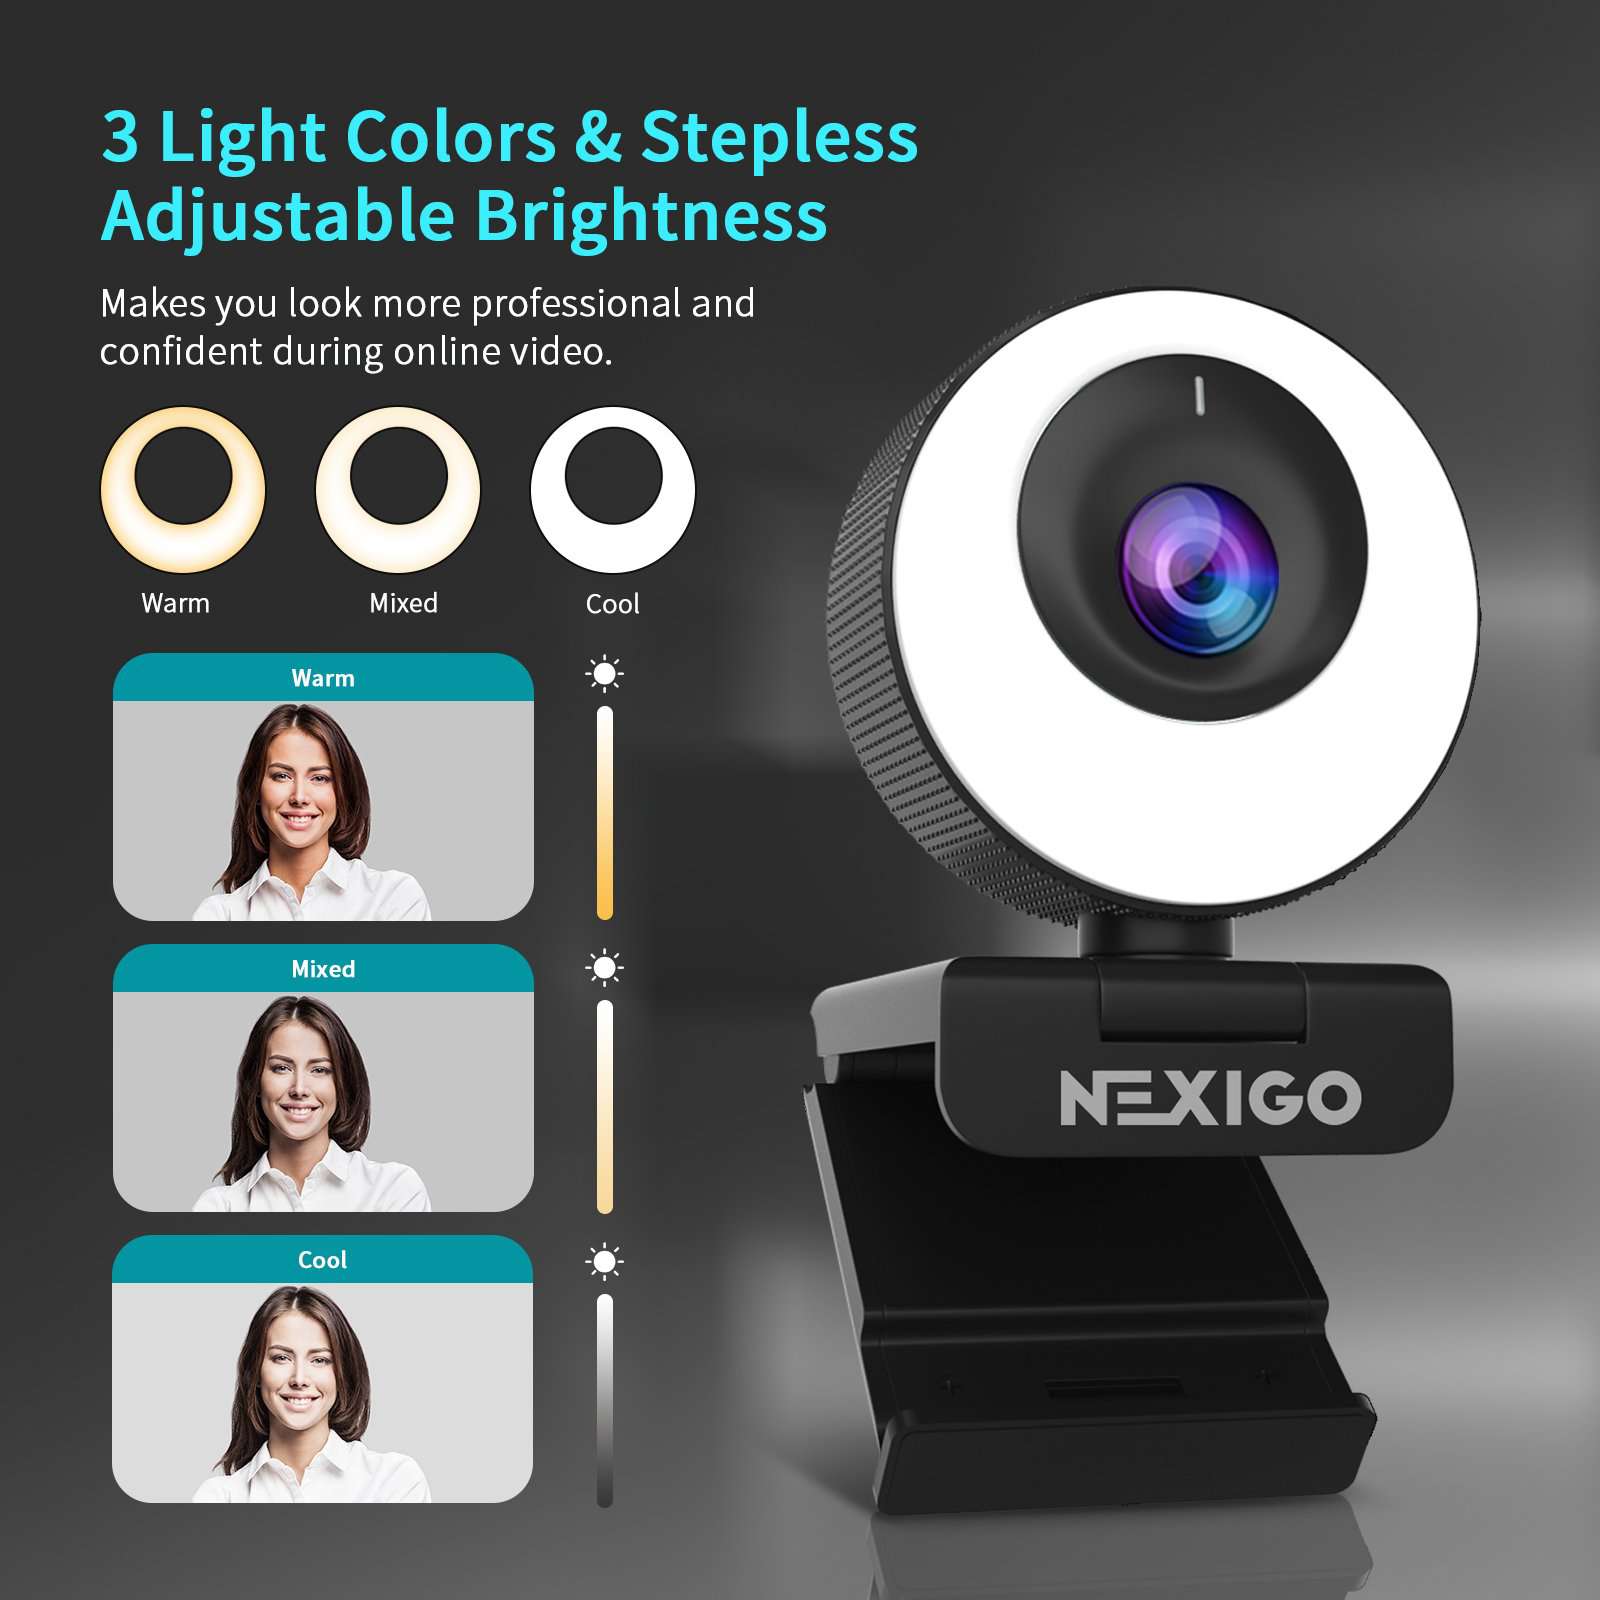 The N620E has three light adjustment modes and brightness control.